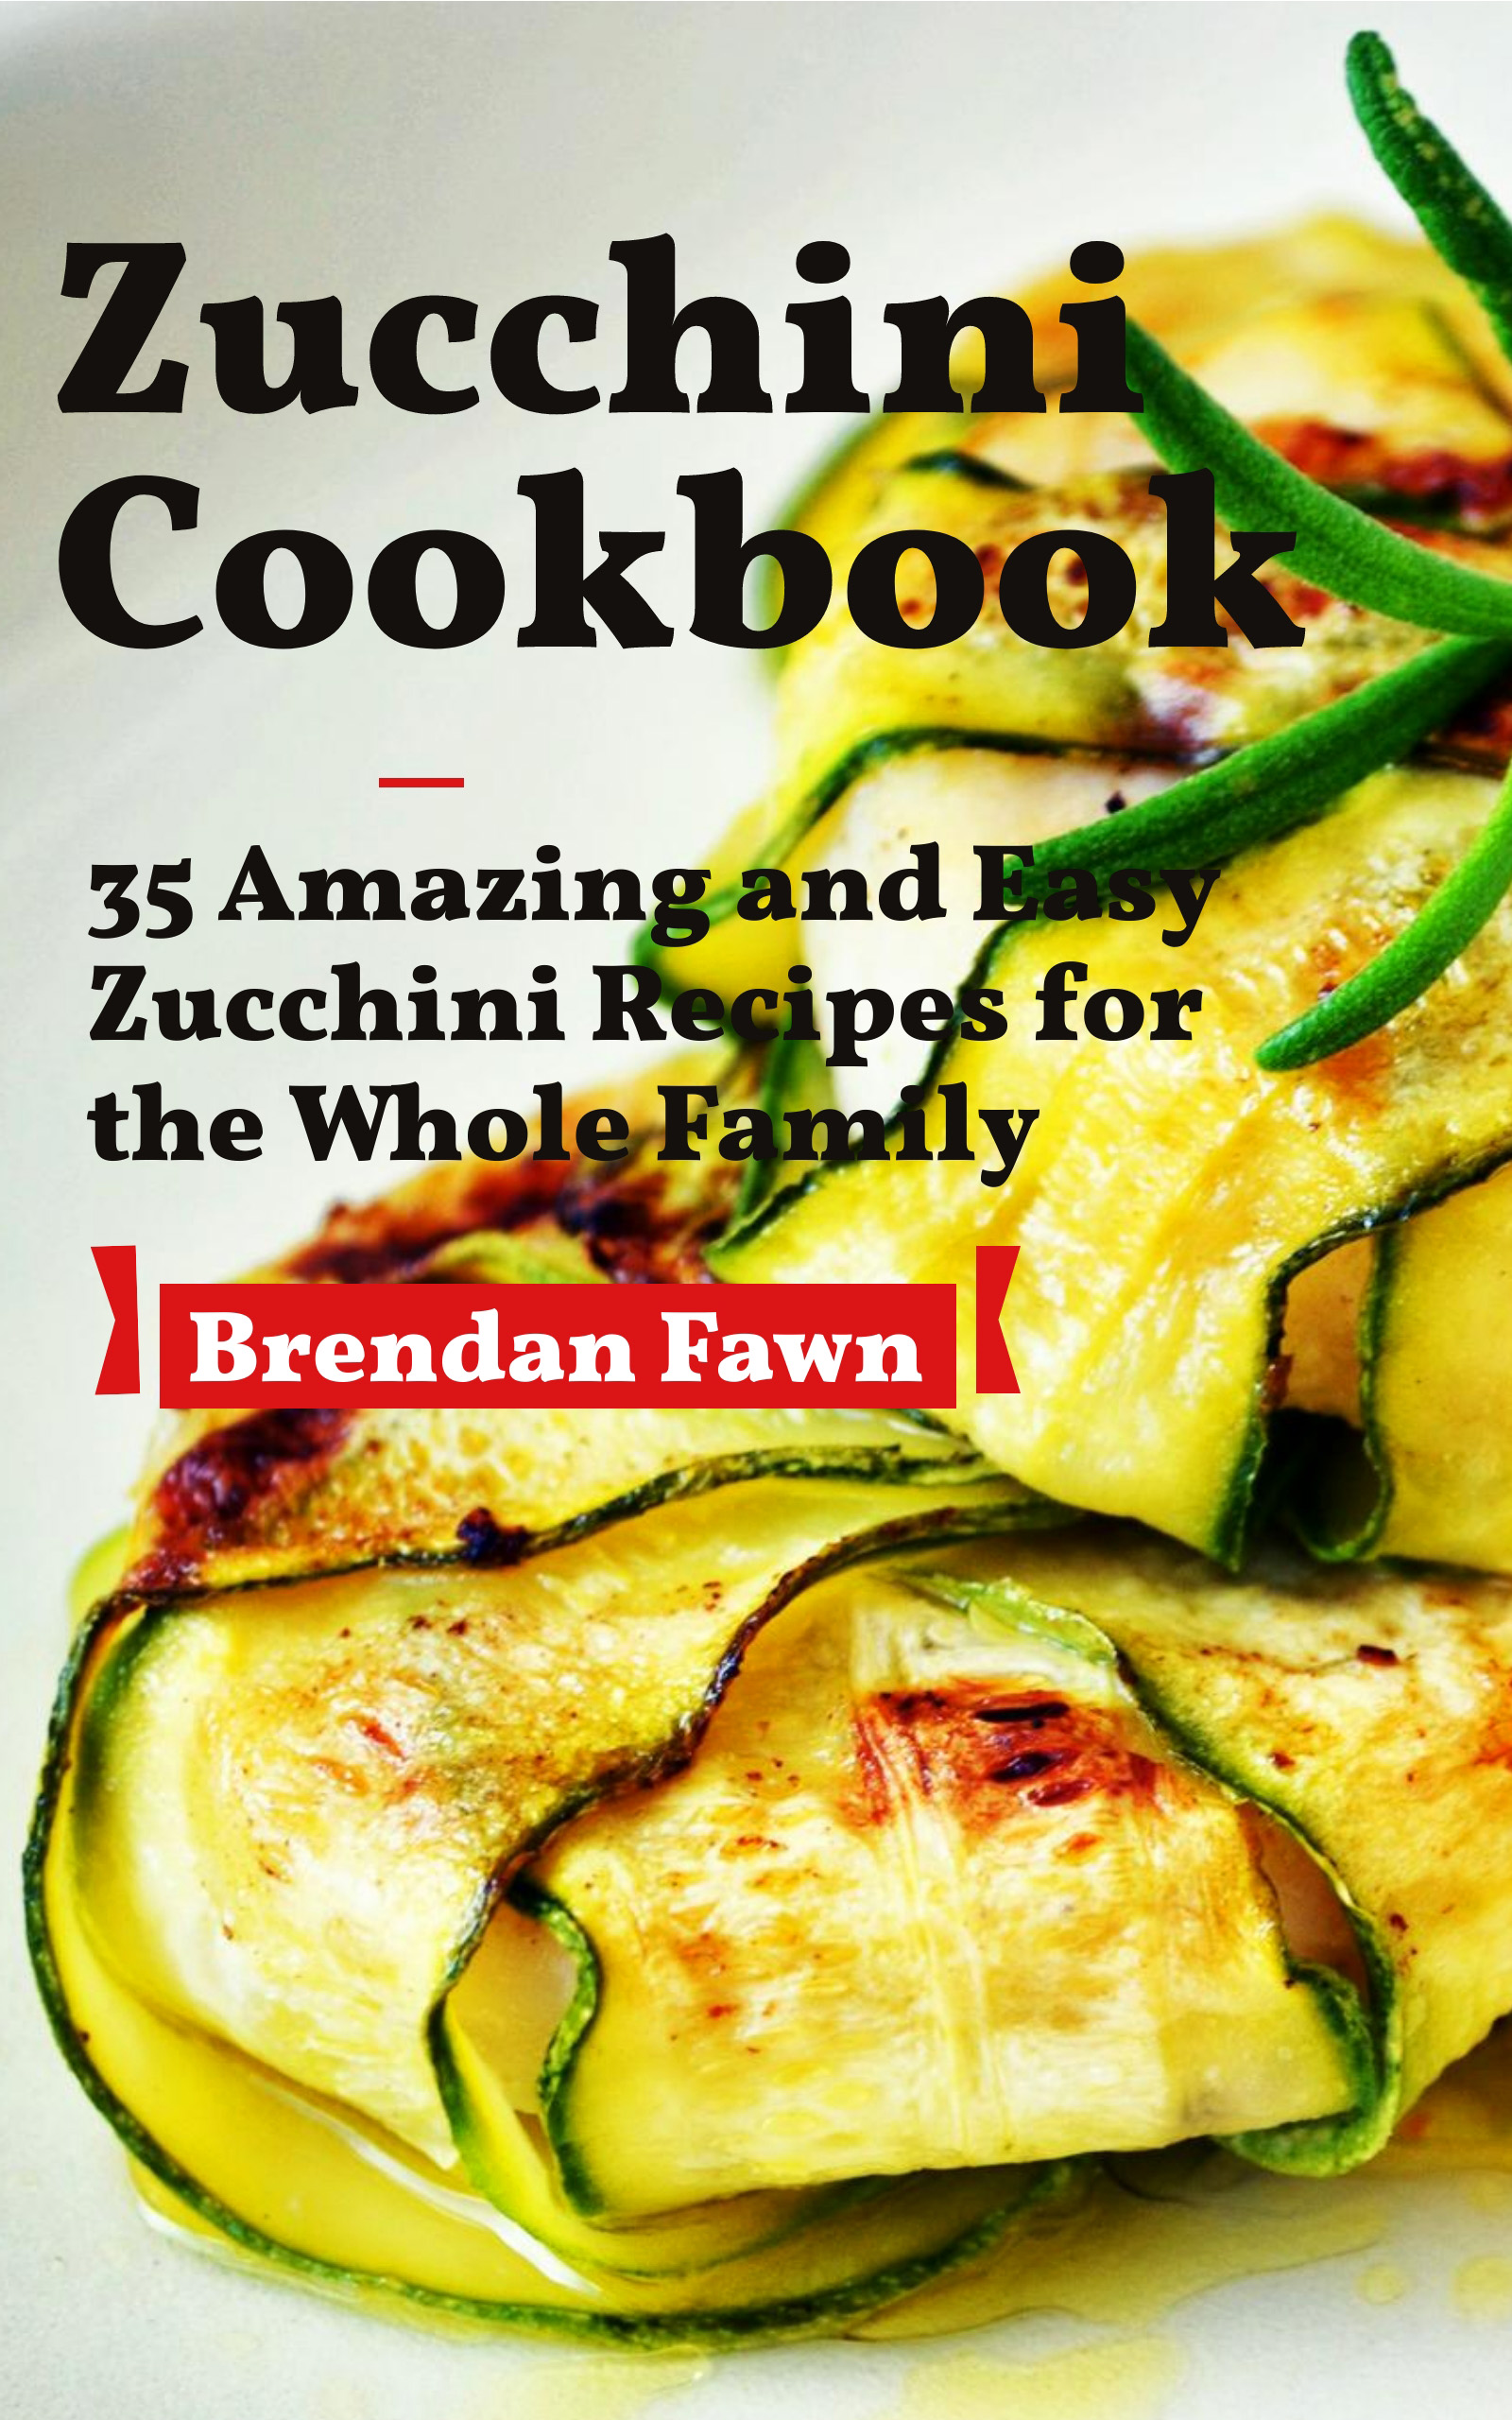 FREE: Zucchini Cookbook by Brendan Fawn